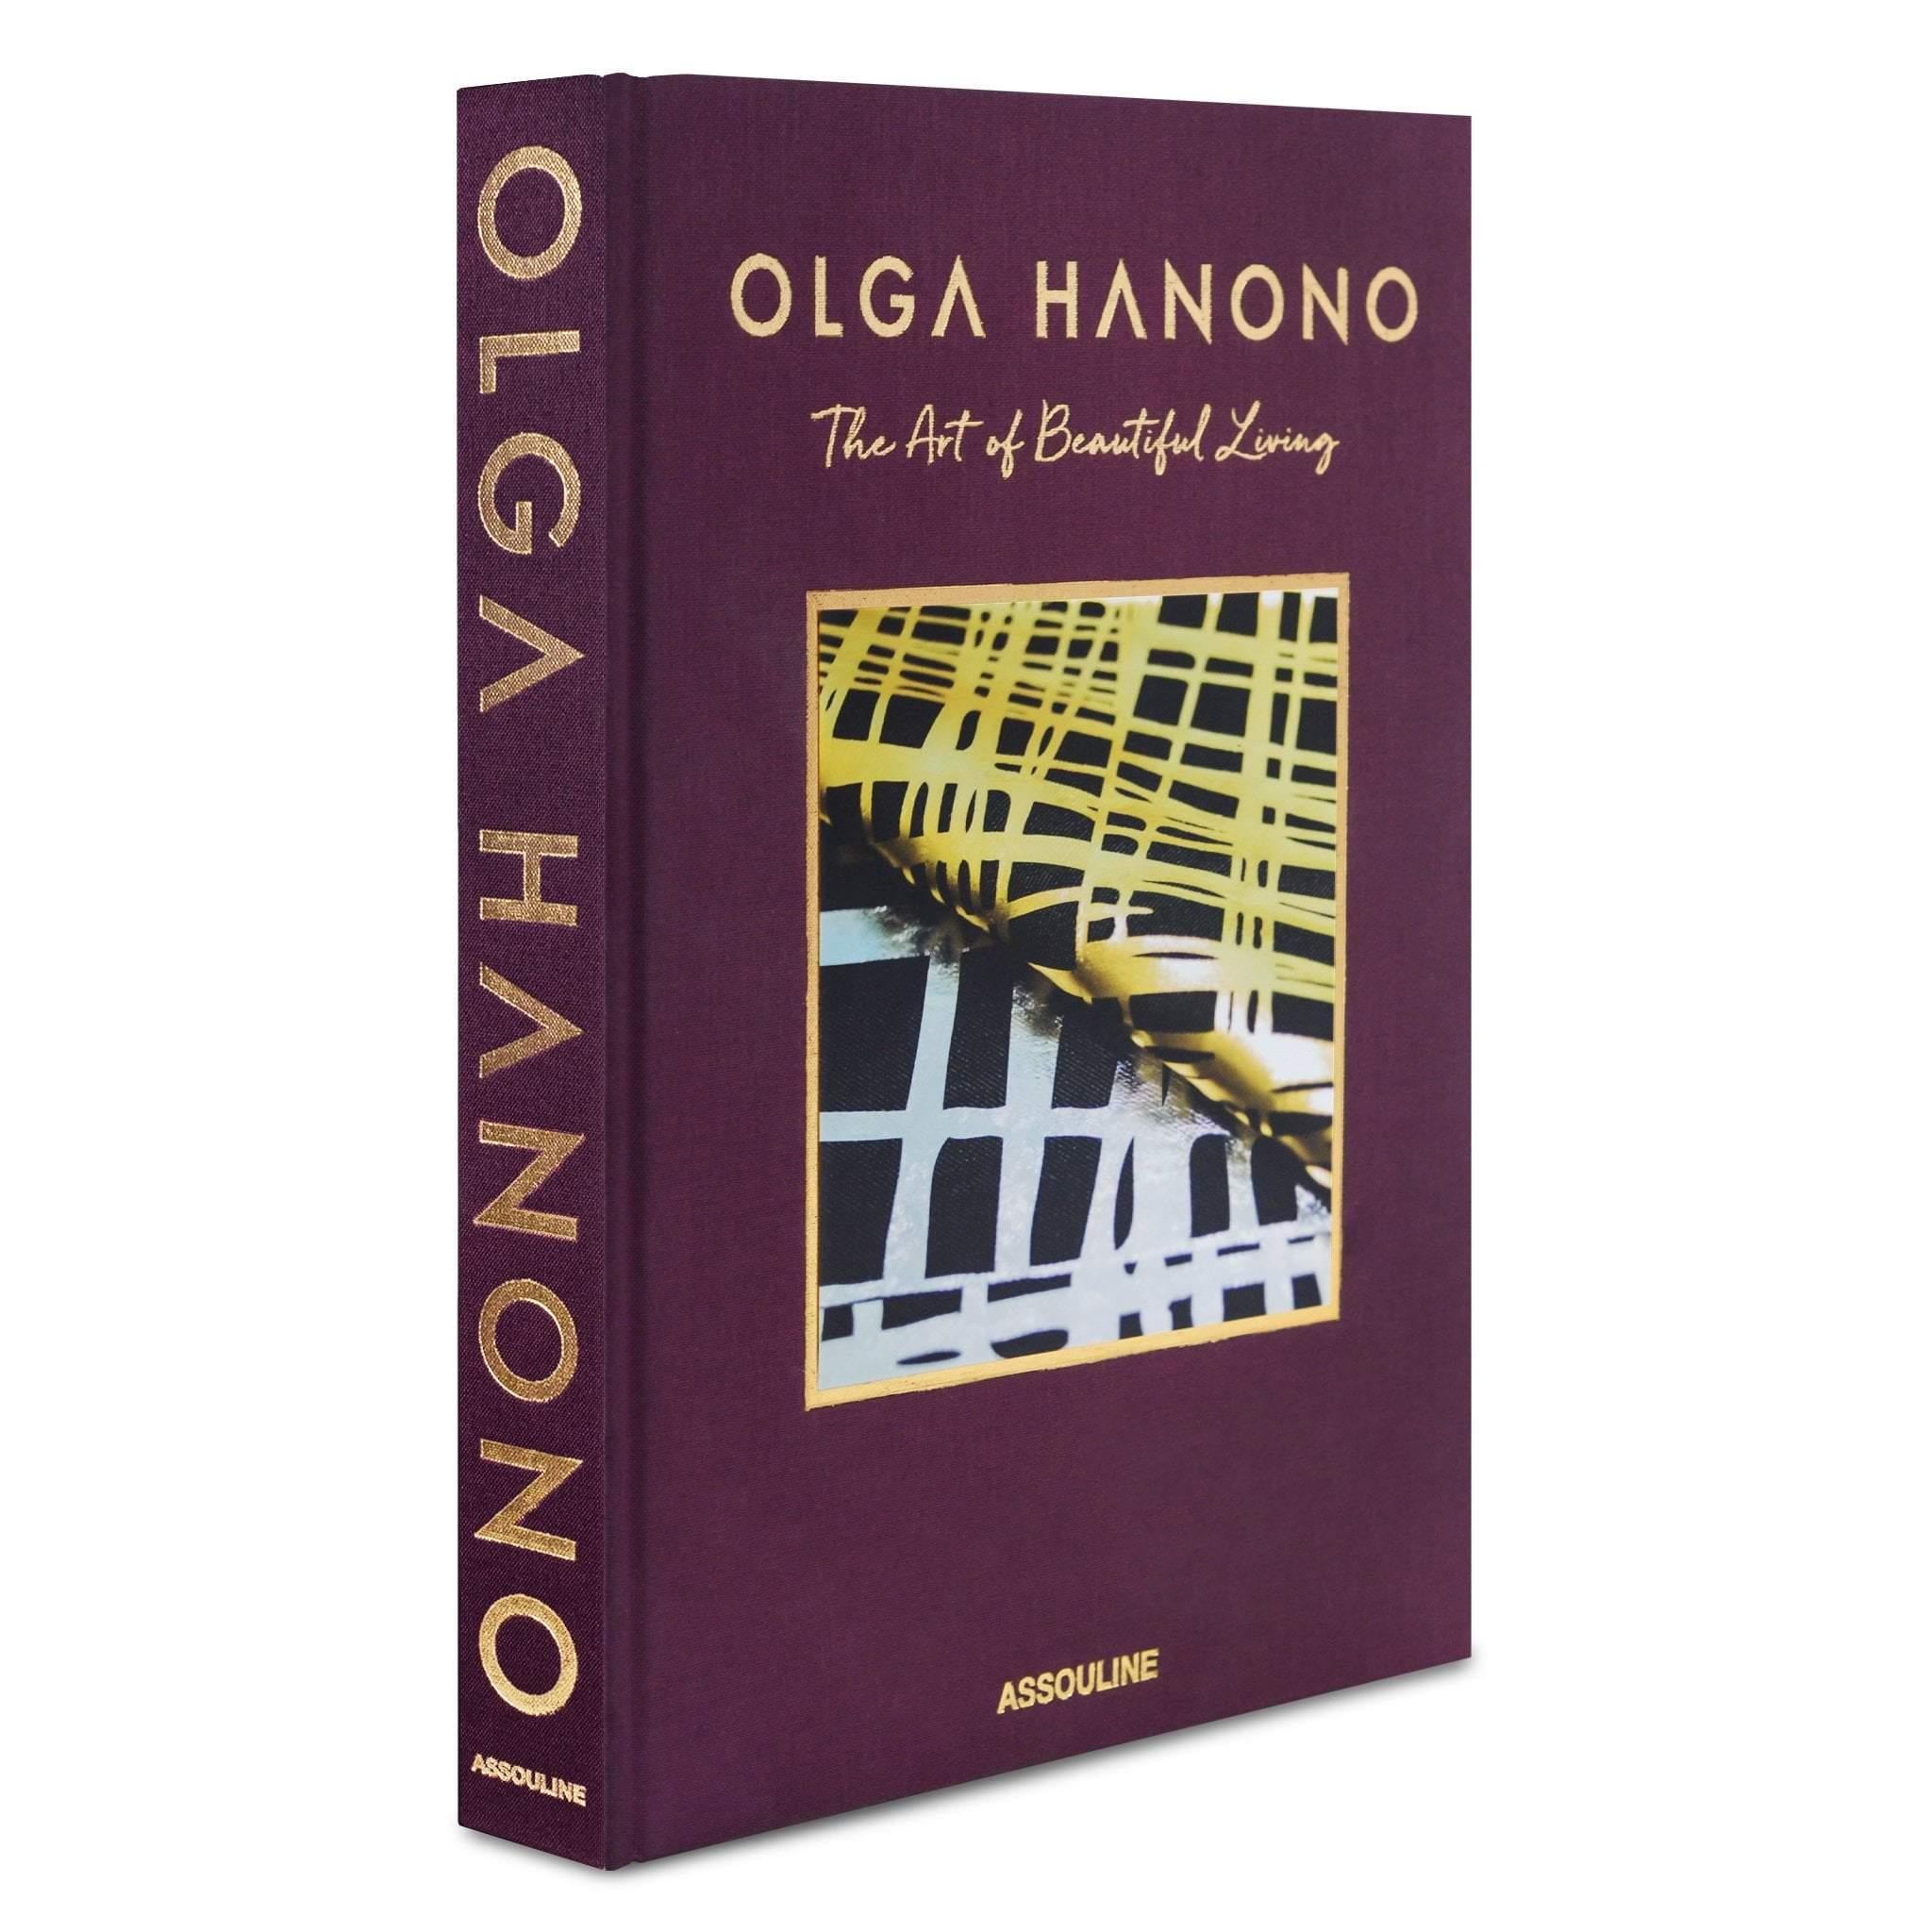 Modern In Stock in Los Angeles, Olga Hanono The Art of Beautiful Living